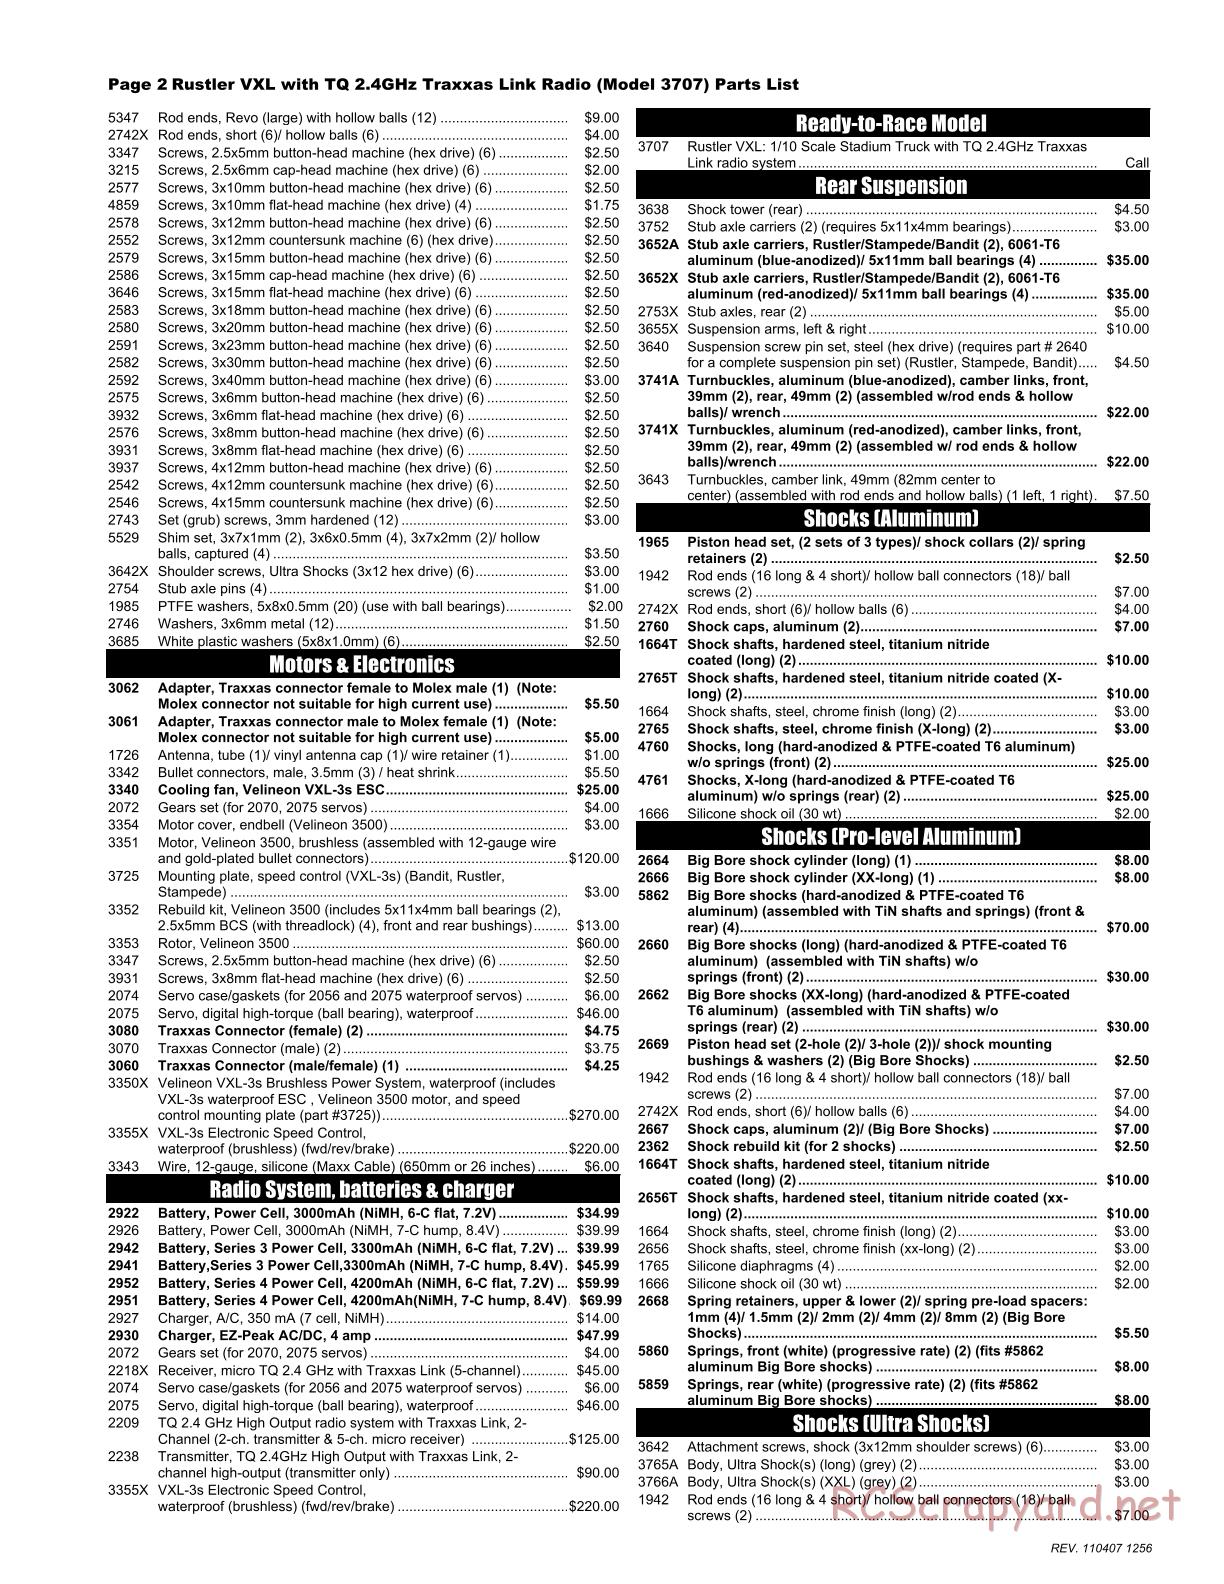 Traxxas - Rustler VXL - Parts List - Page 2